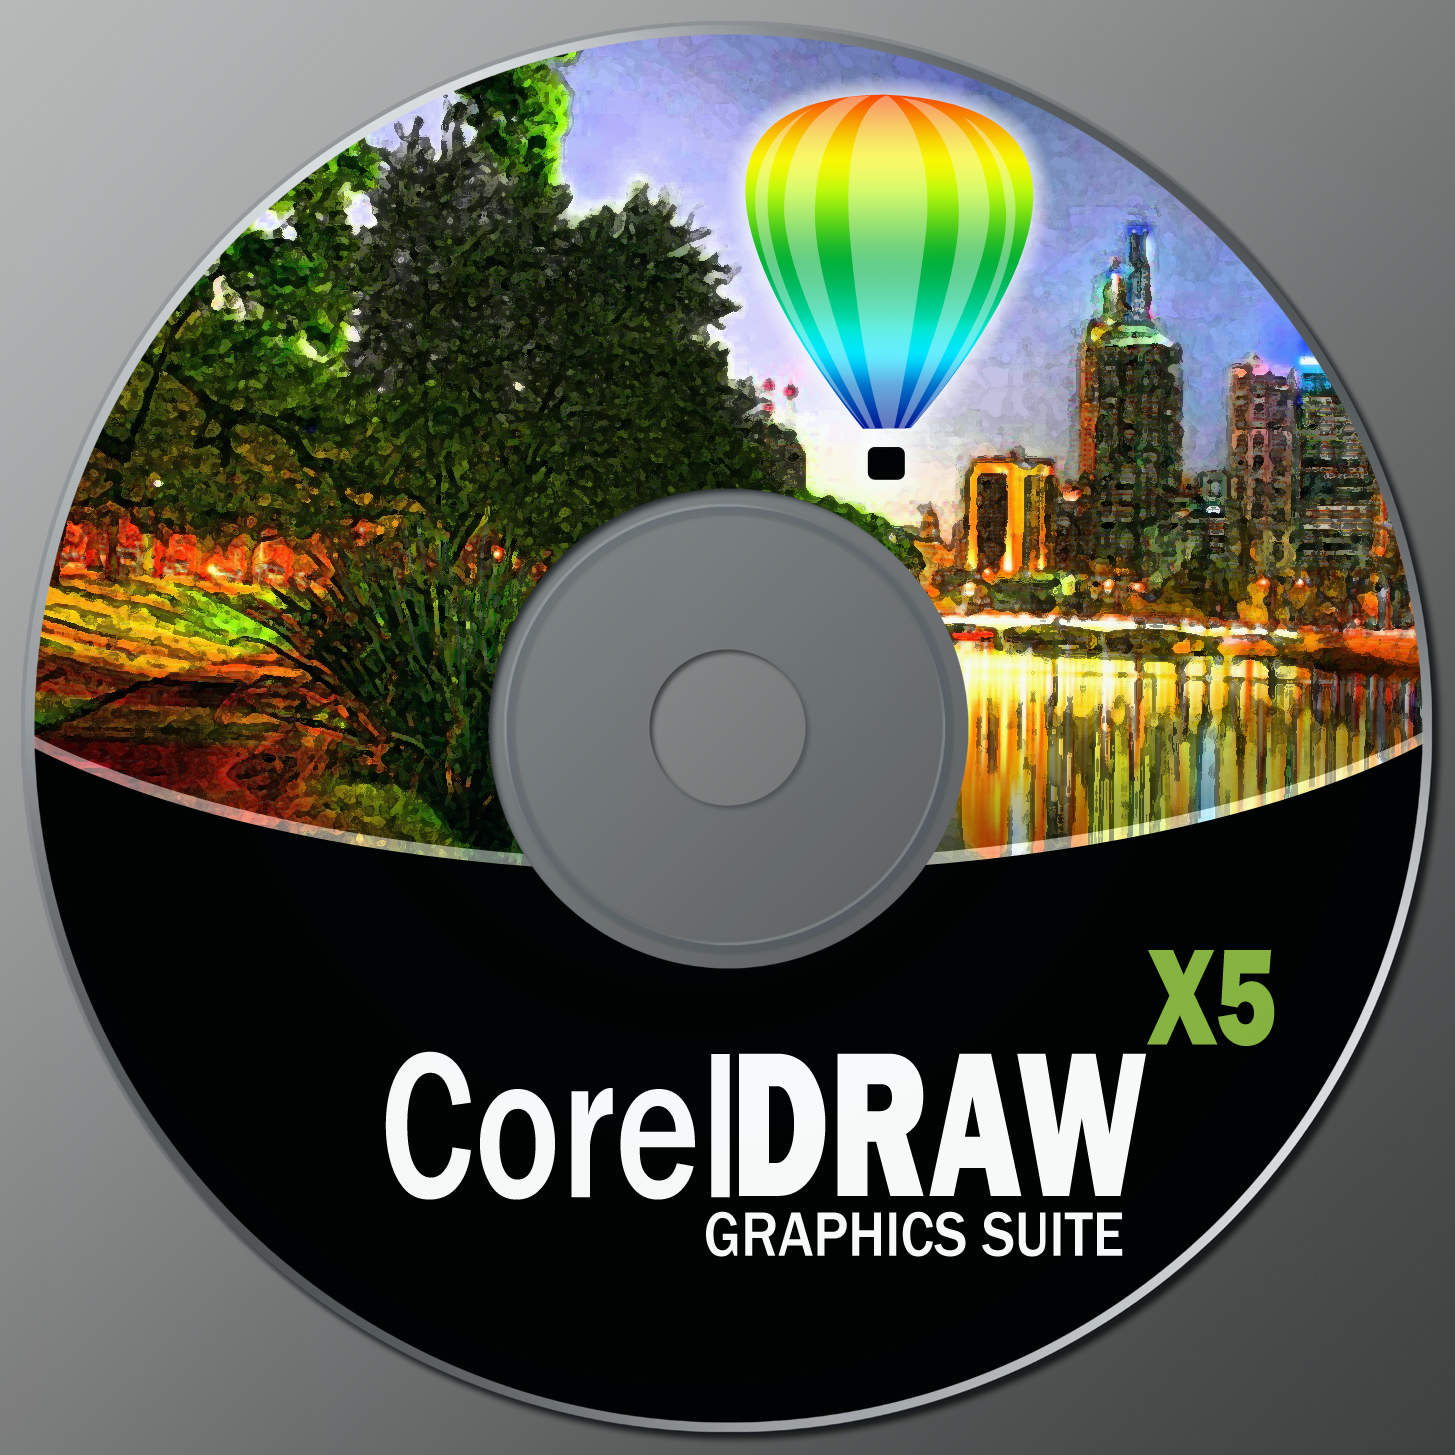 corel draw x5 clipart free download - photo #35